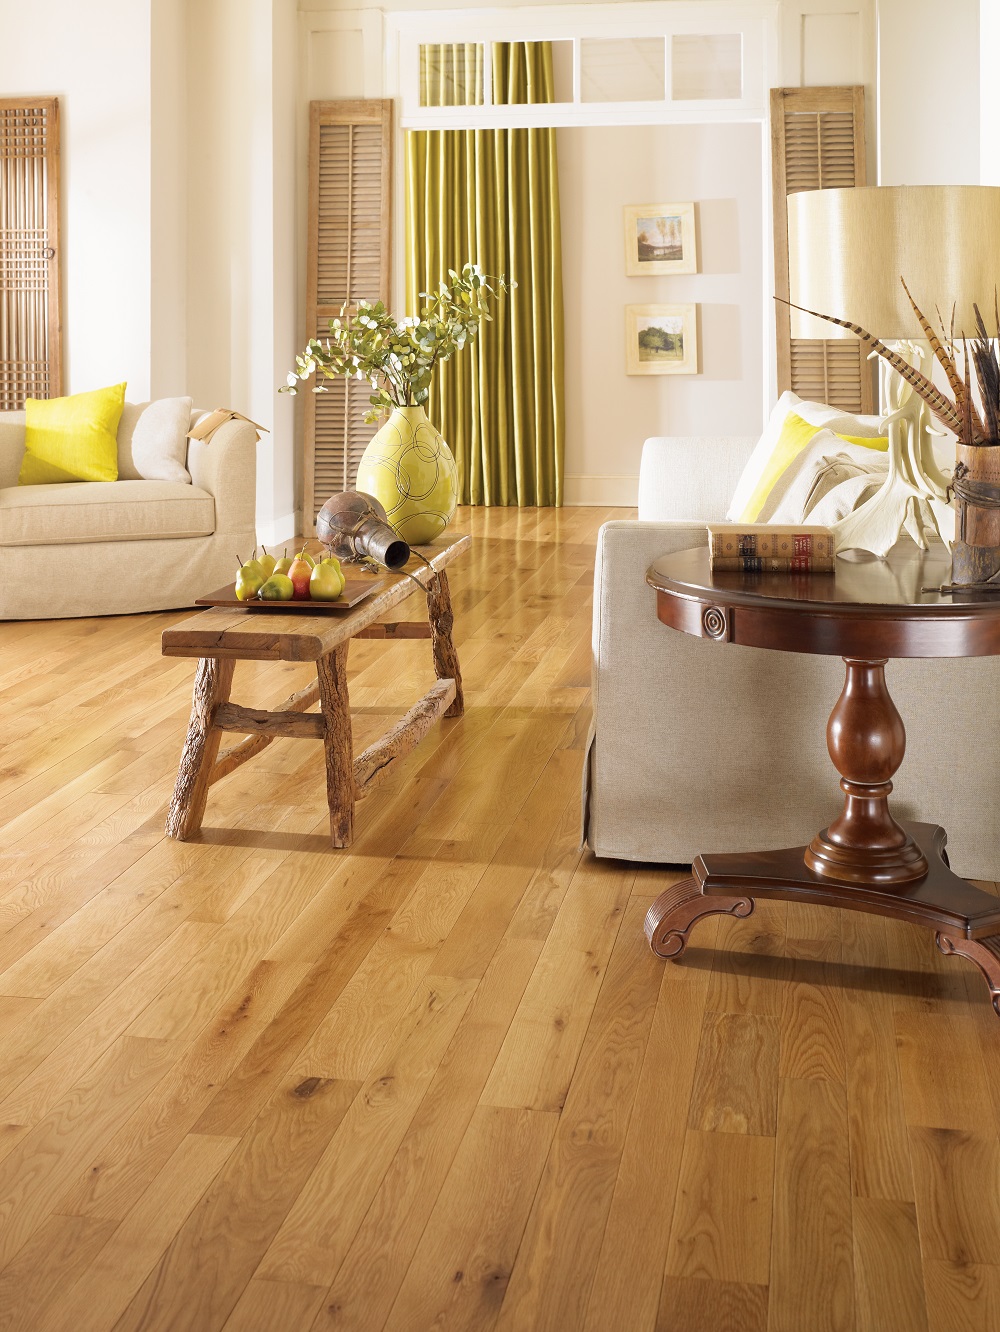 Home Somerset Hardwood Flooring, Somerset Classic Hardwood Flooring